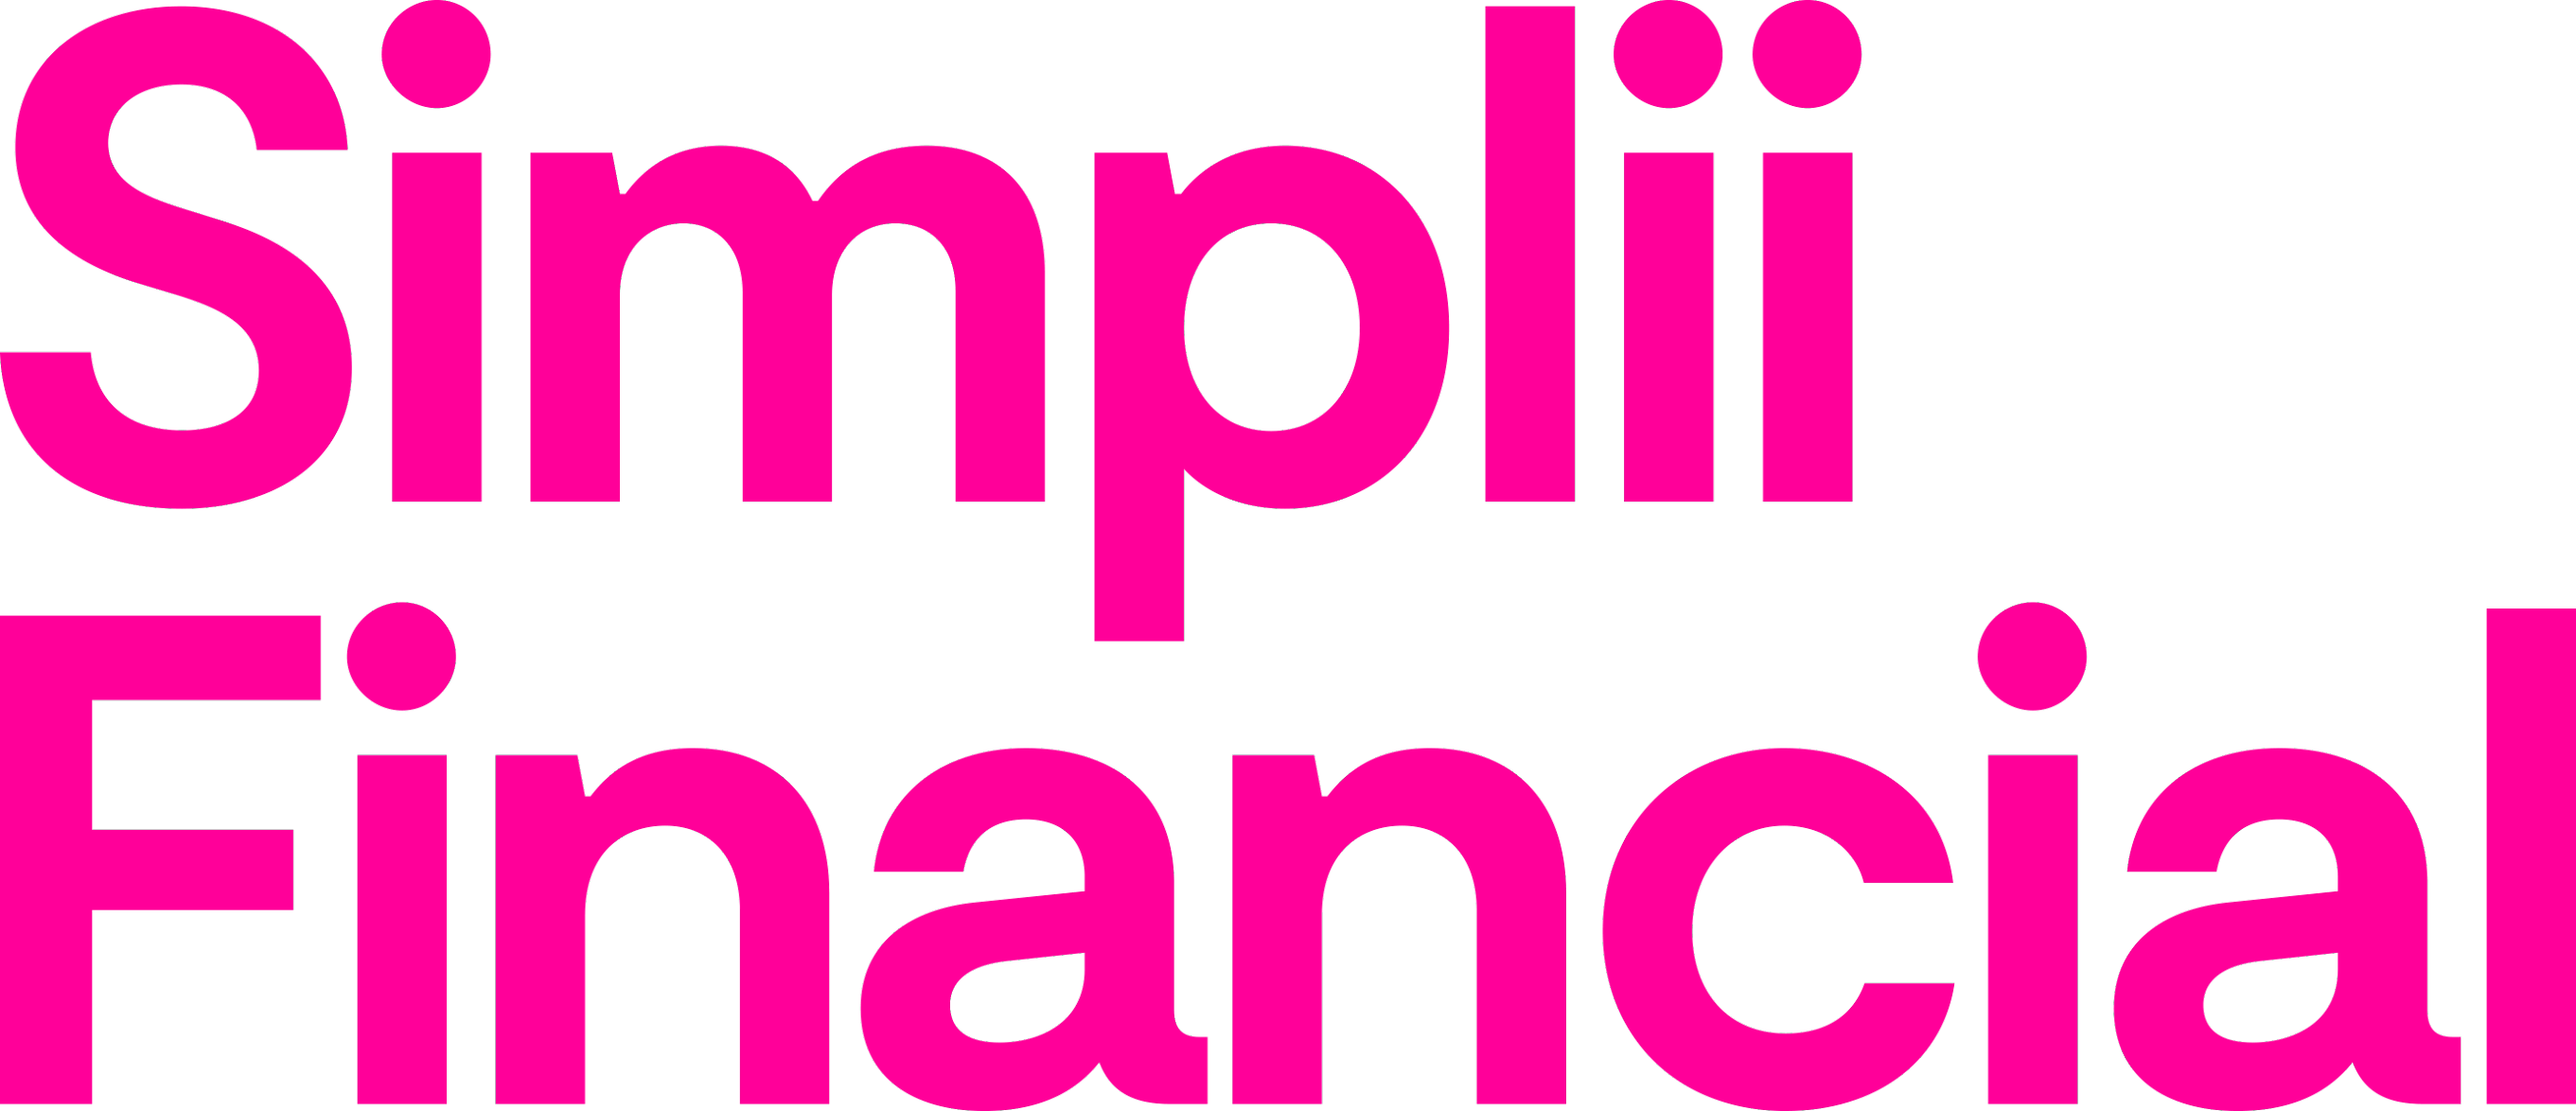 Simplii financial logo